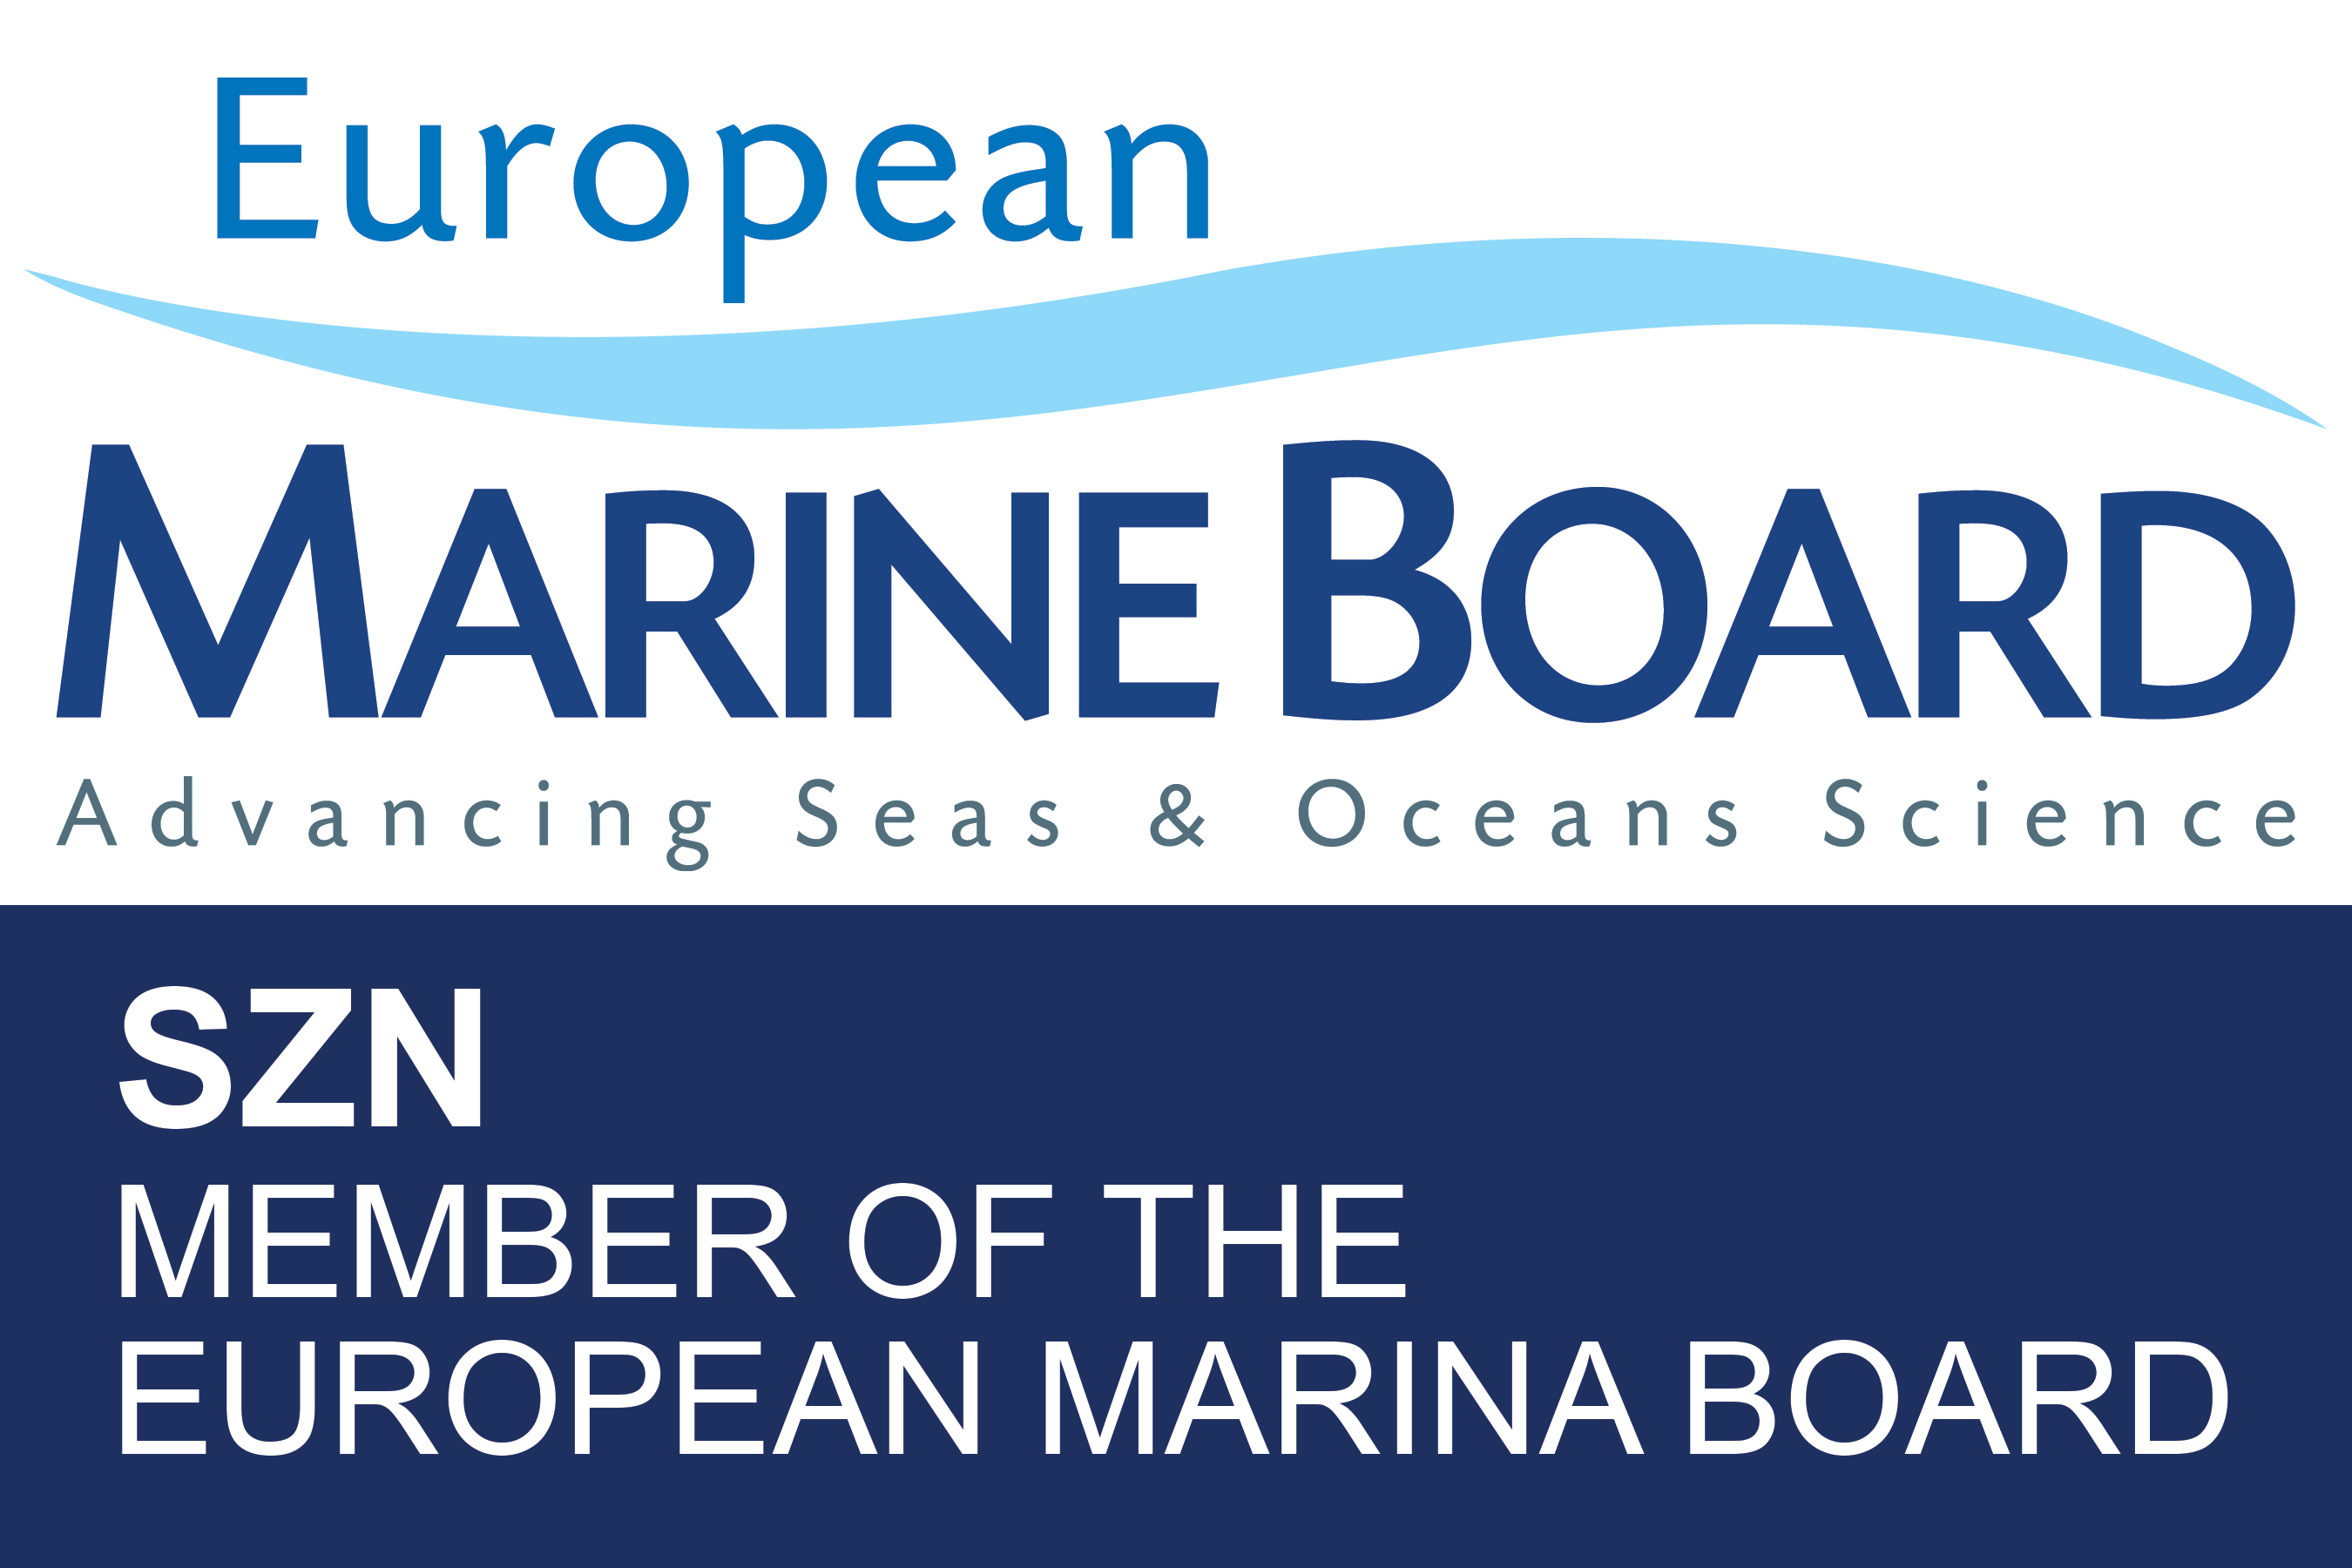 SZN - Member of the European Marina Board